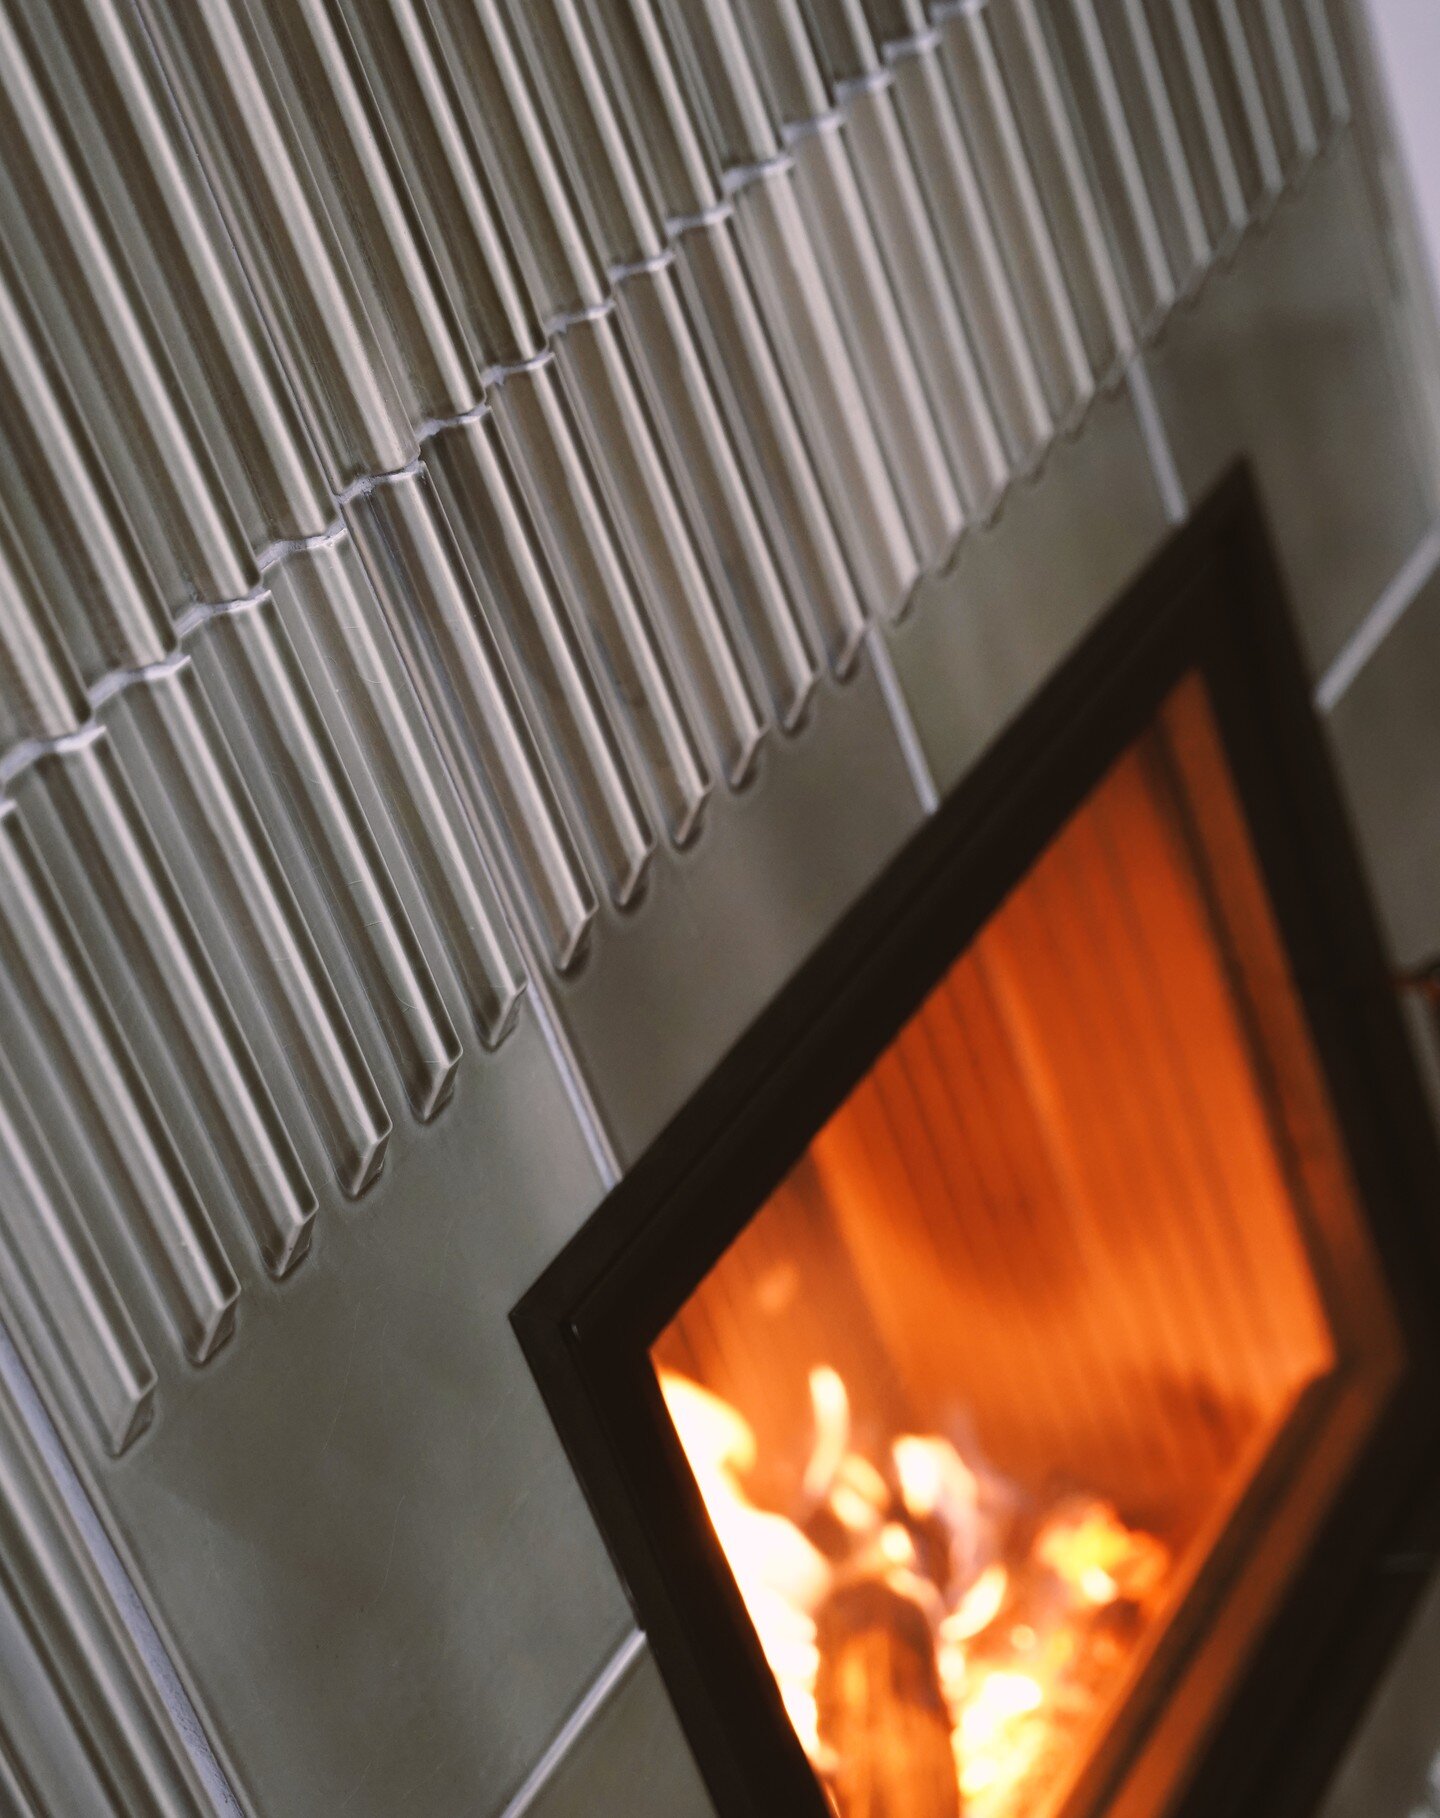 First fire in a Relief 524 stove

#fireplace #tiledstove #ceramictiles #kachelofen #kamin #kaminbau #hafner #designfireplace #woodstove #interiordesign #homedesign #heating #homeinspiration #stovedesign #designprocess #industrialdesign #lauferofen #h